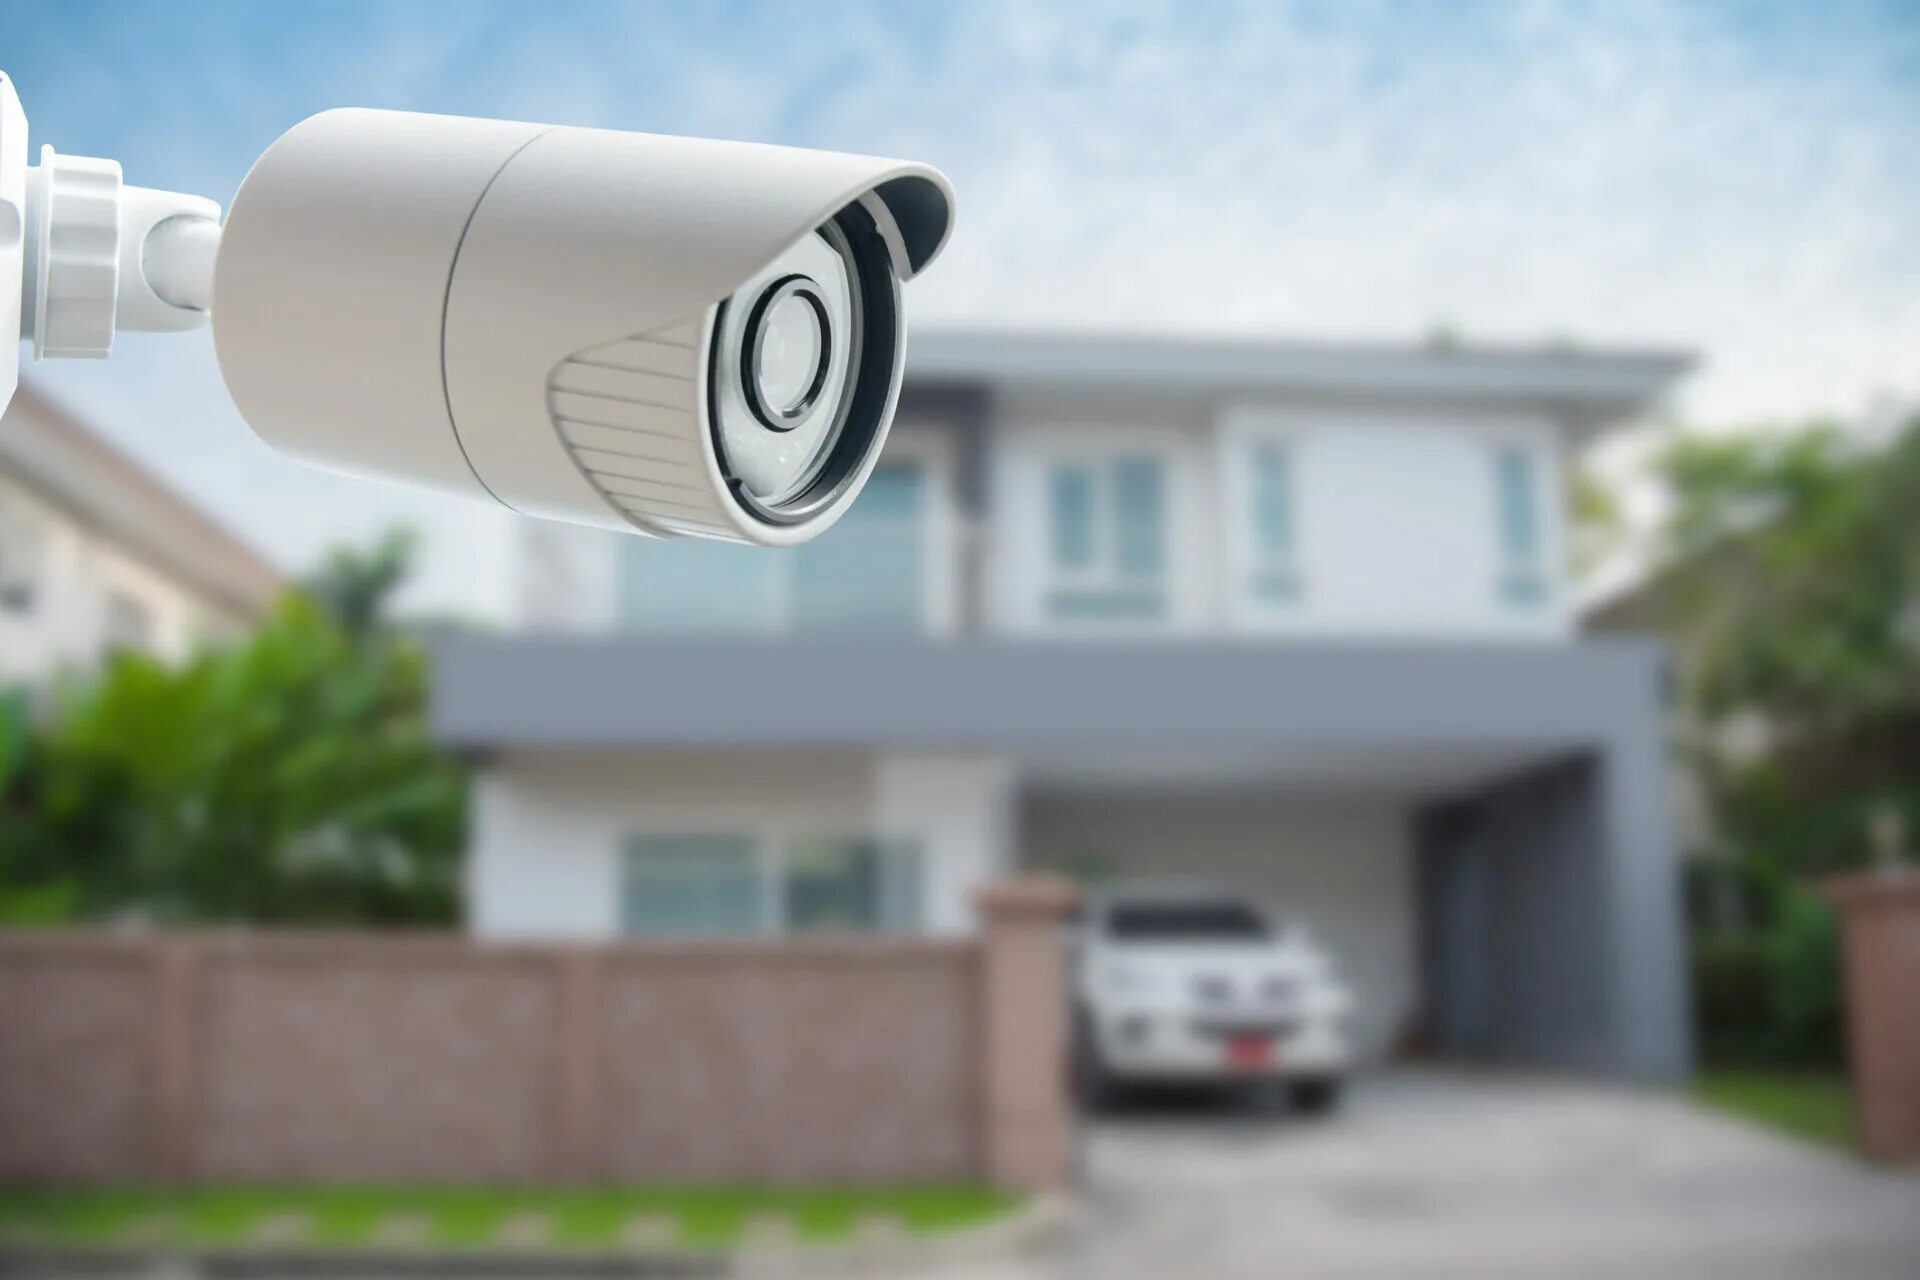 Keep the latest on home security systems. Камера видеонаблюдения. Камеры видео наблюдения. Видеонаблюдение в частном доме. Видеокамера уличная.